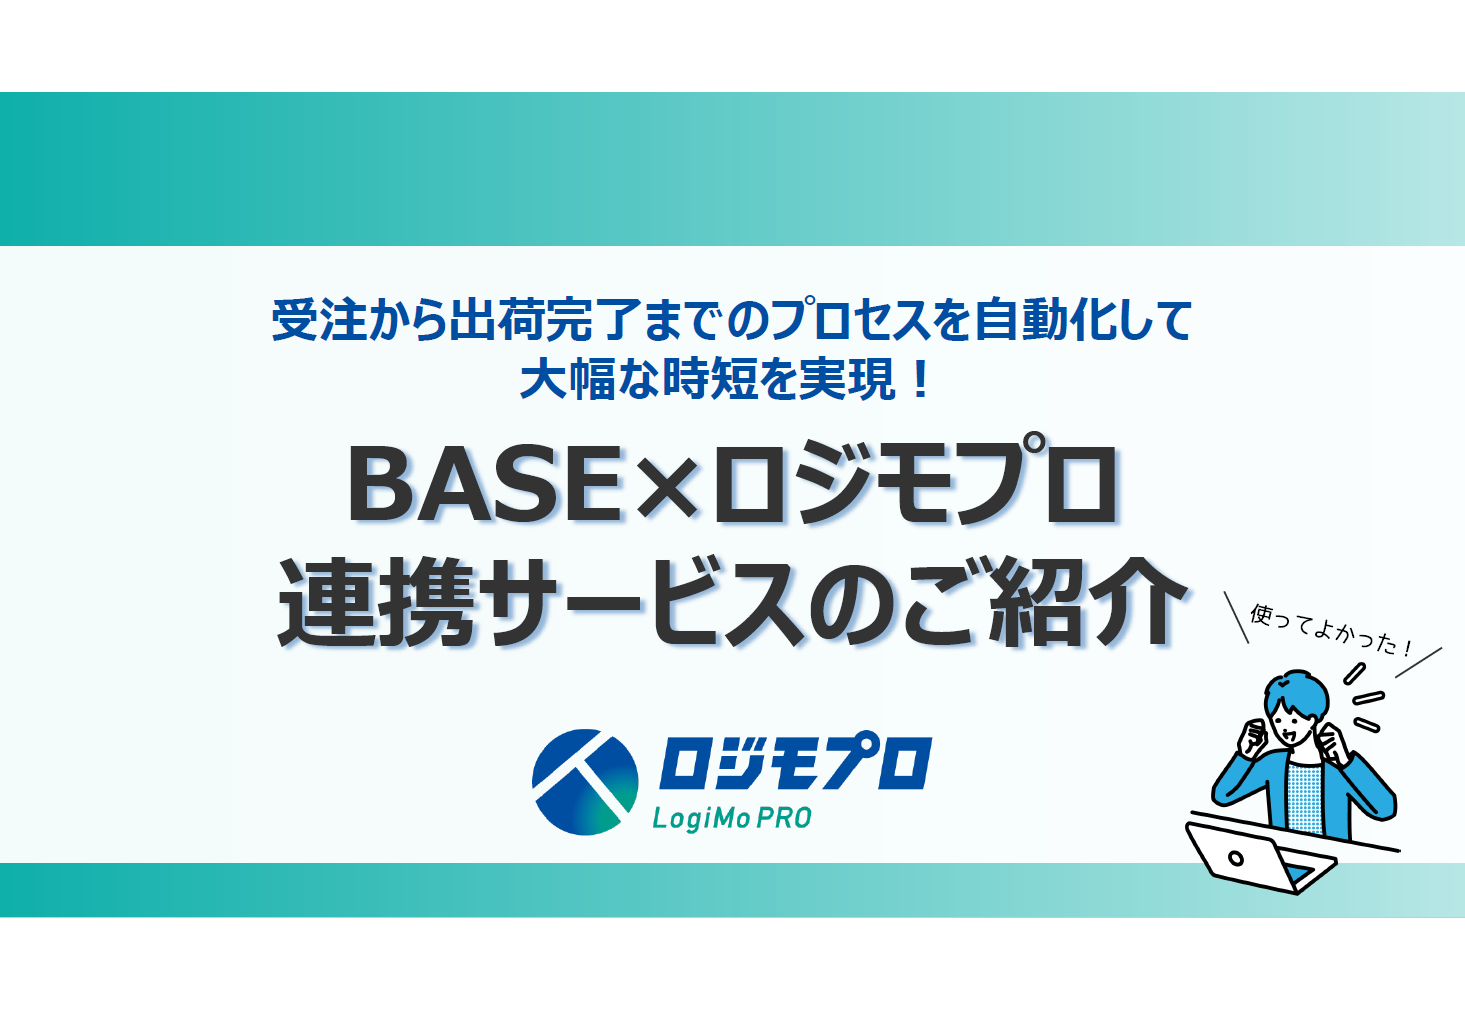 BASE 連携サービス紹介資料